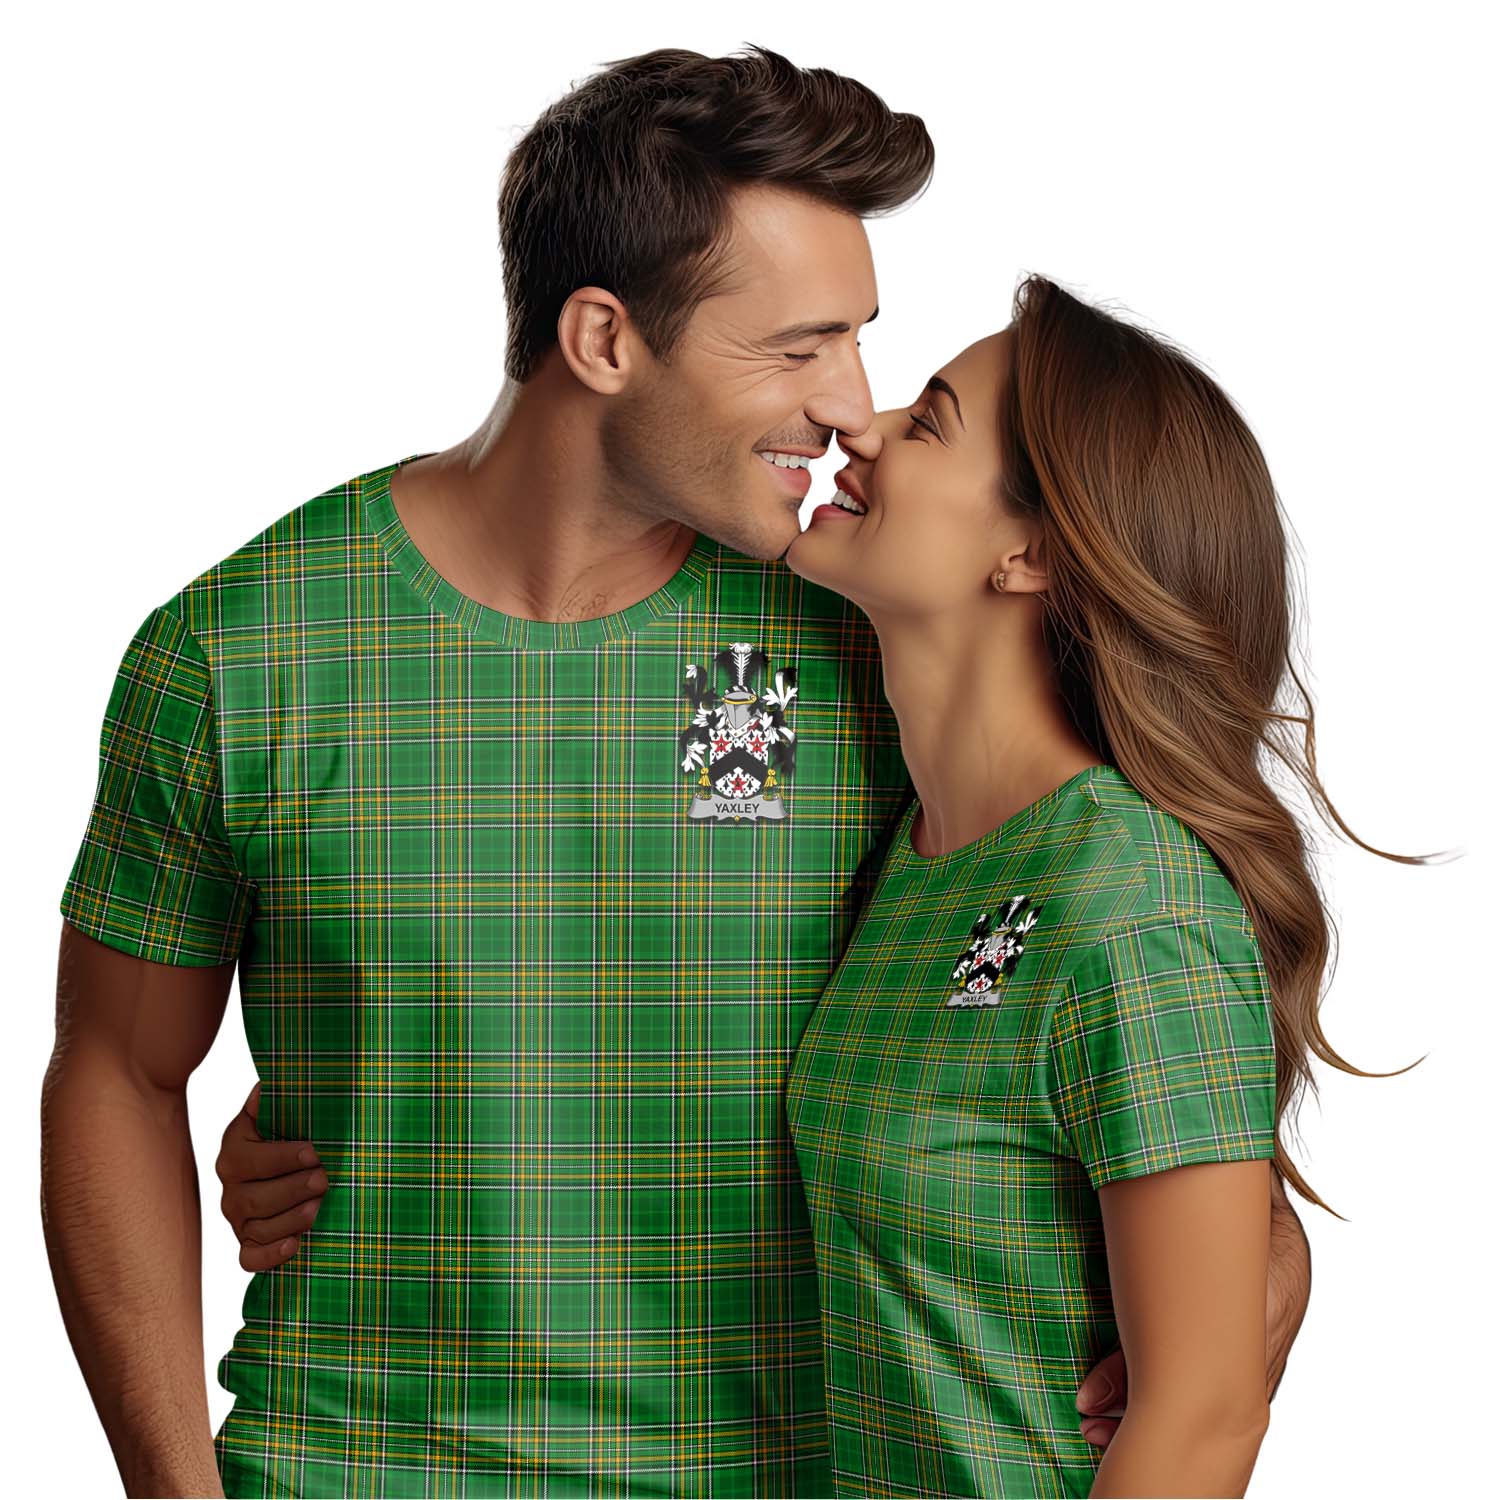 Tartan Vibes Clothing Yaxley Ireland Clan Tartan T-Shirt with Family Seal